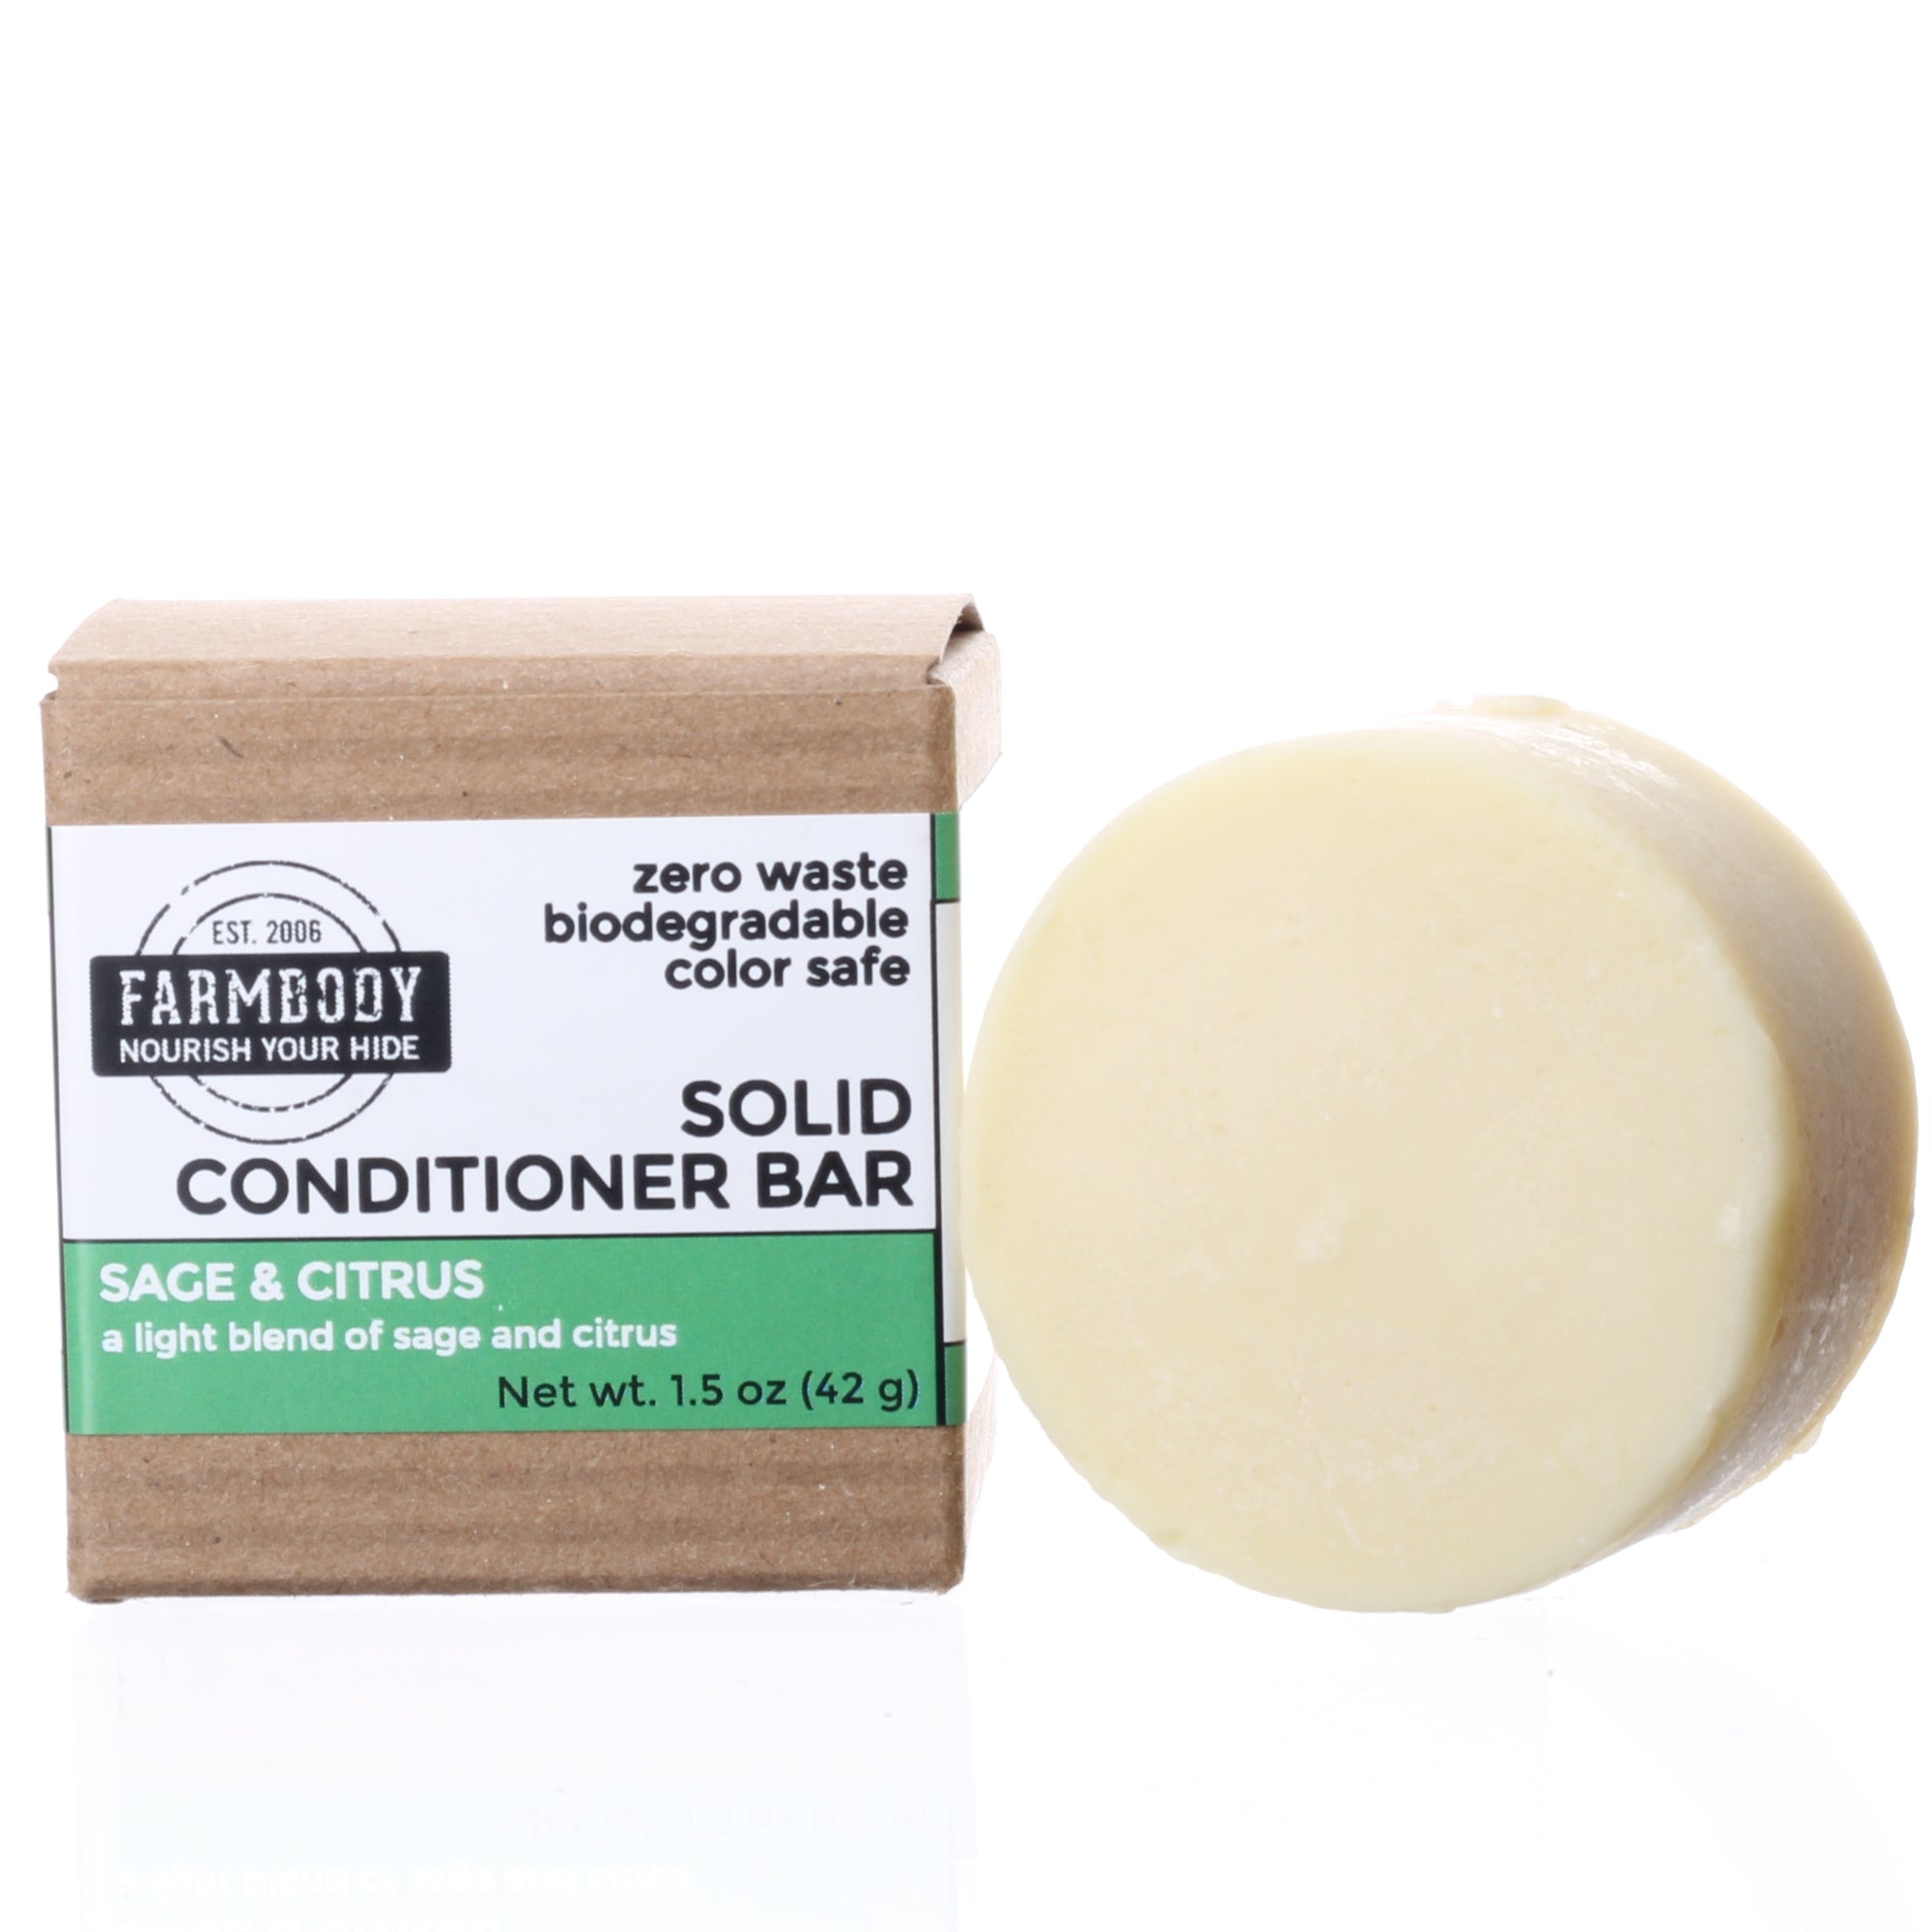 Farmbody silicone free color sage solid conditioner bar in sage and citrus fragrance